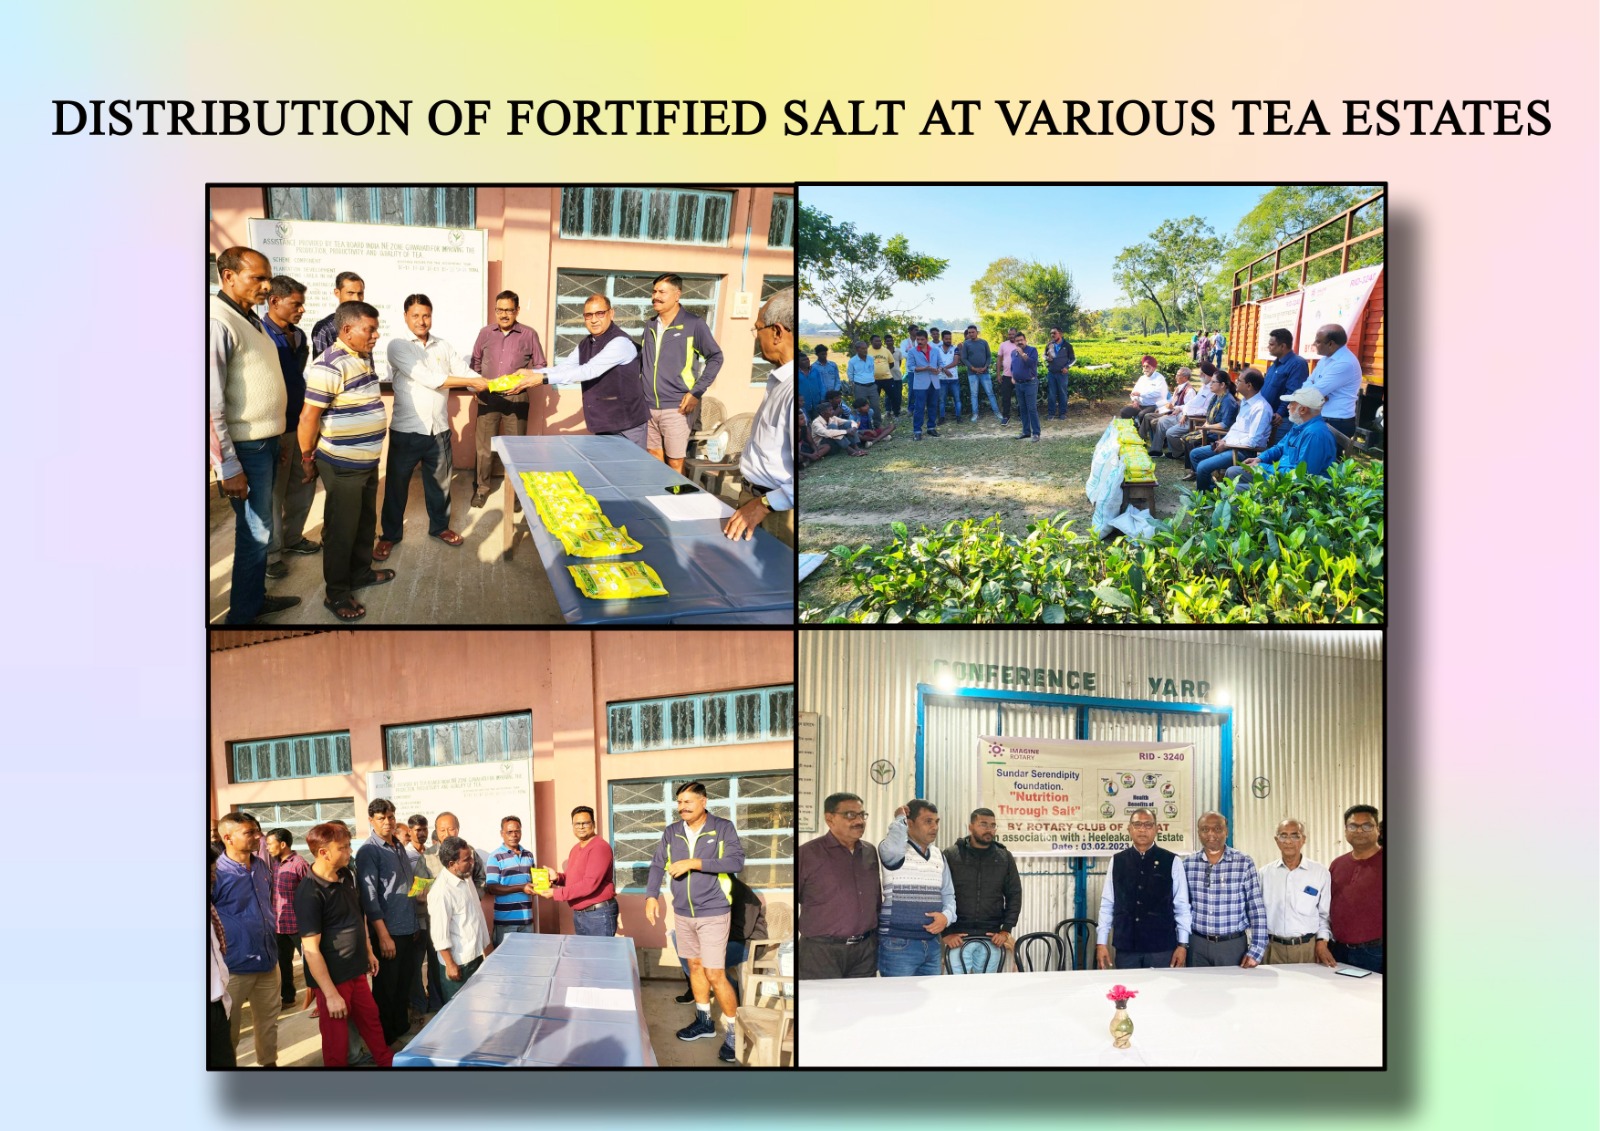 Fortified Salt distribution in Tea Estates.